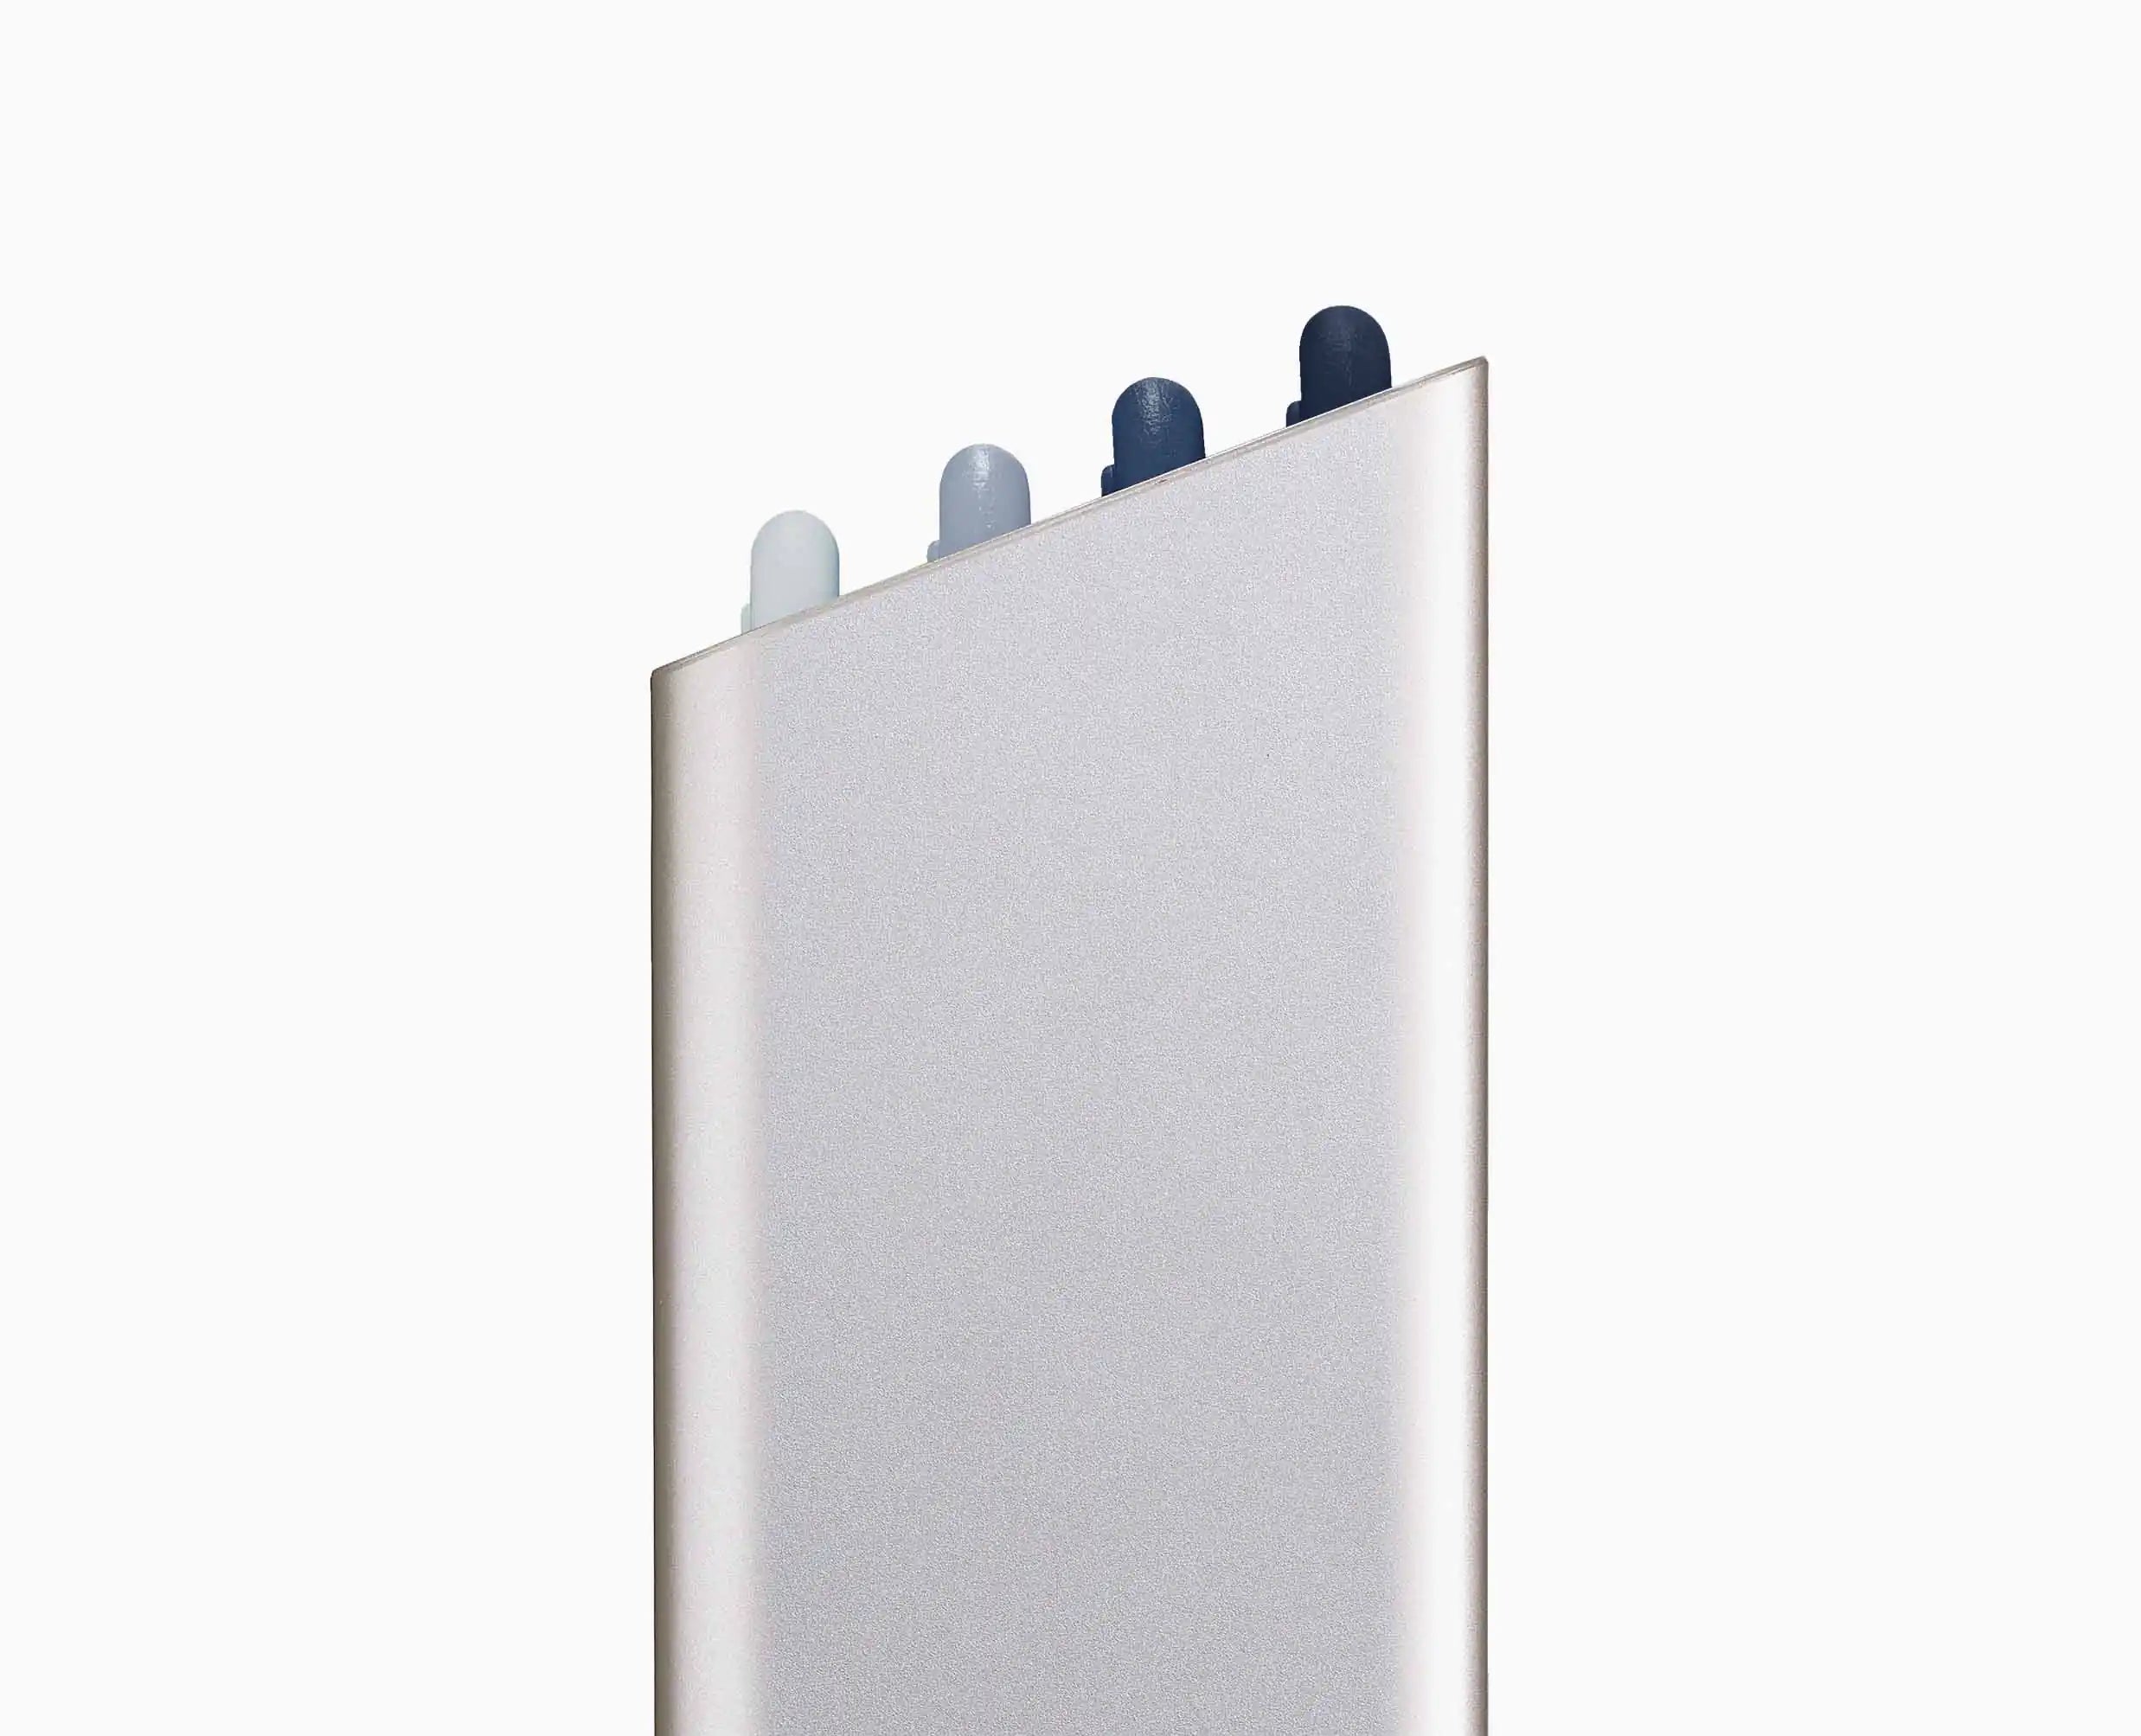 Folio™ Steel 4-piece Stainless-steel Cutting Board Set